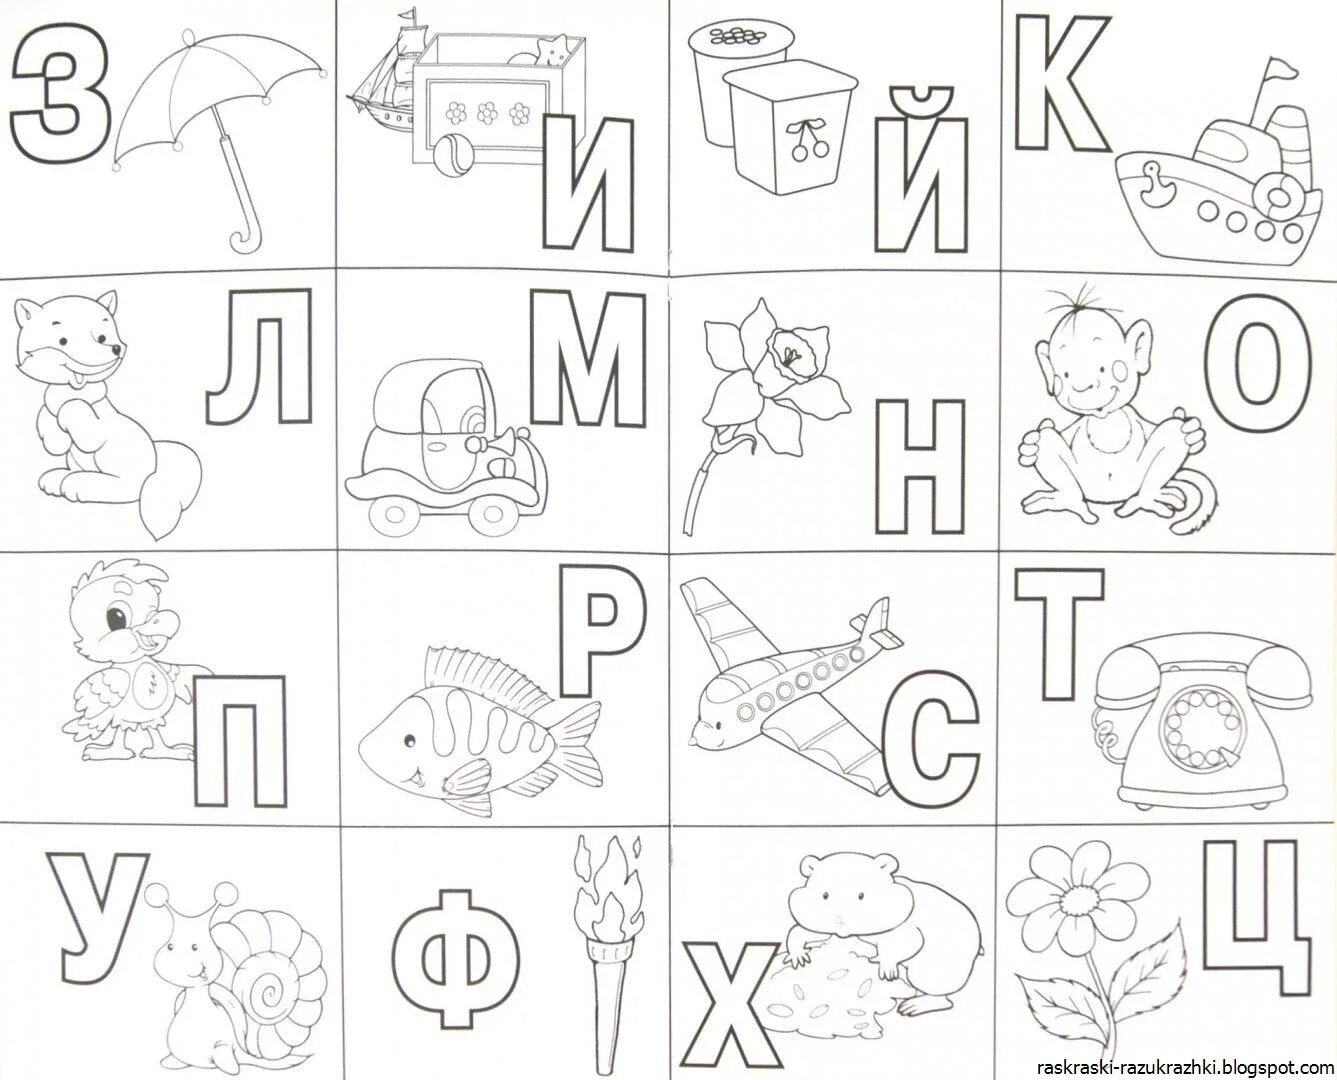 Preschool Alphabet #19